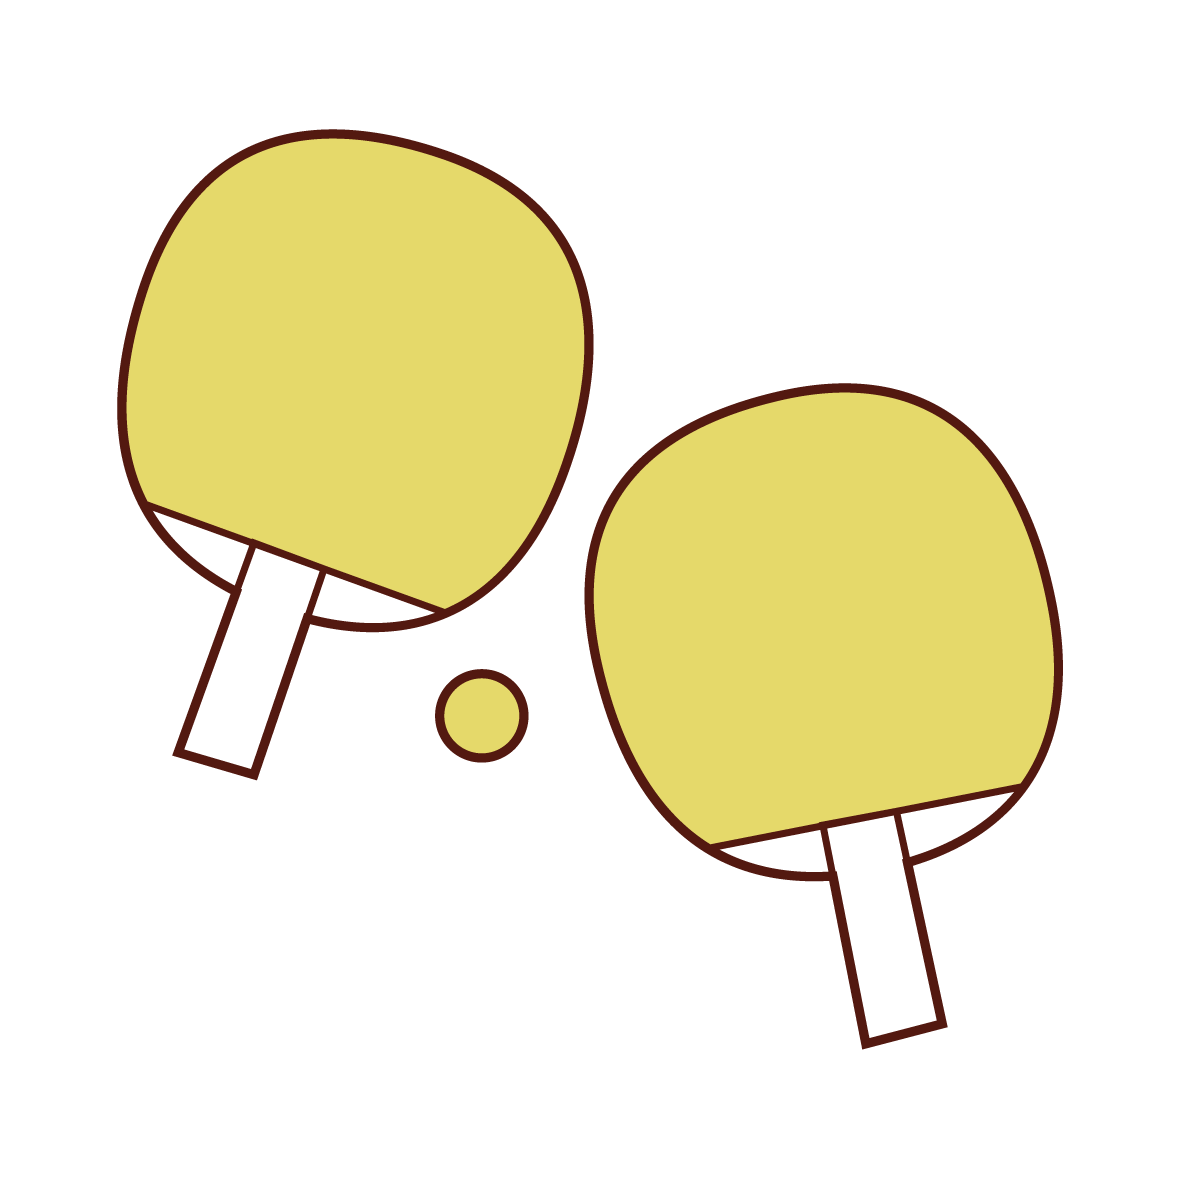 Table Tennis Racquet Illustration